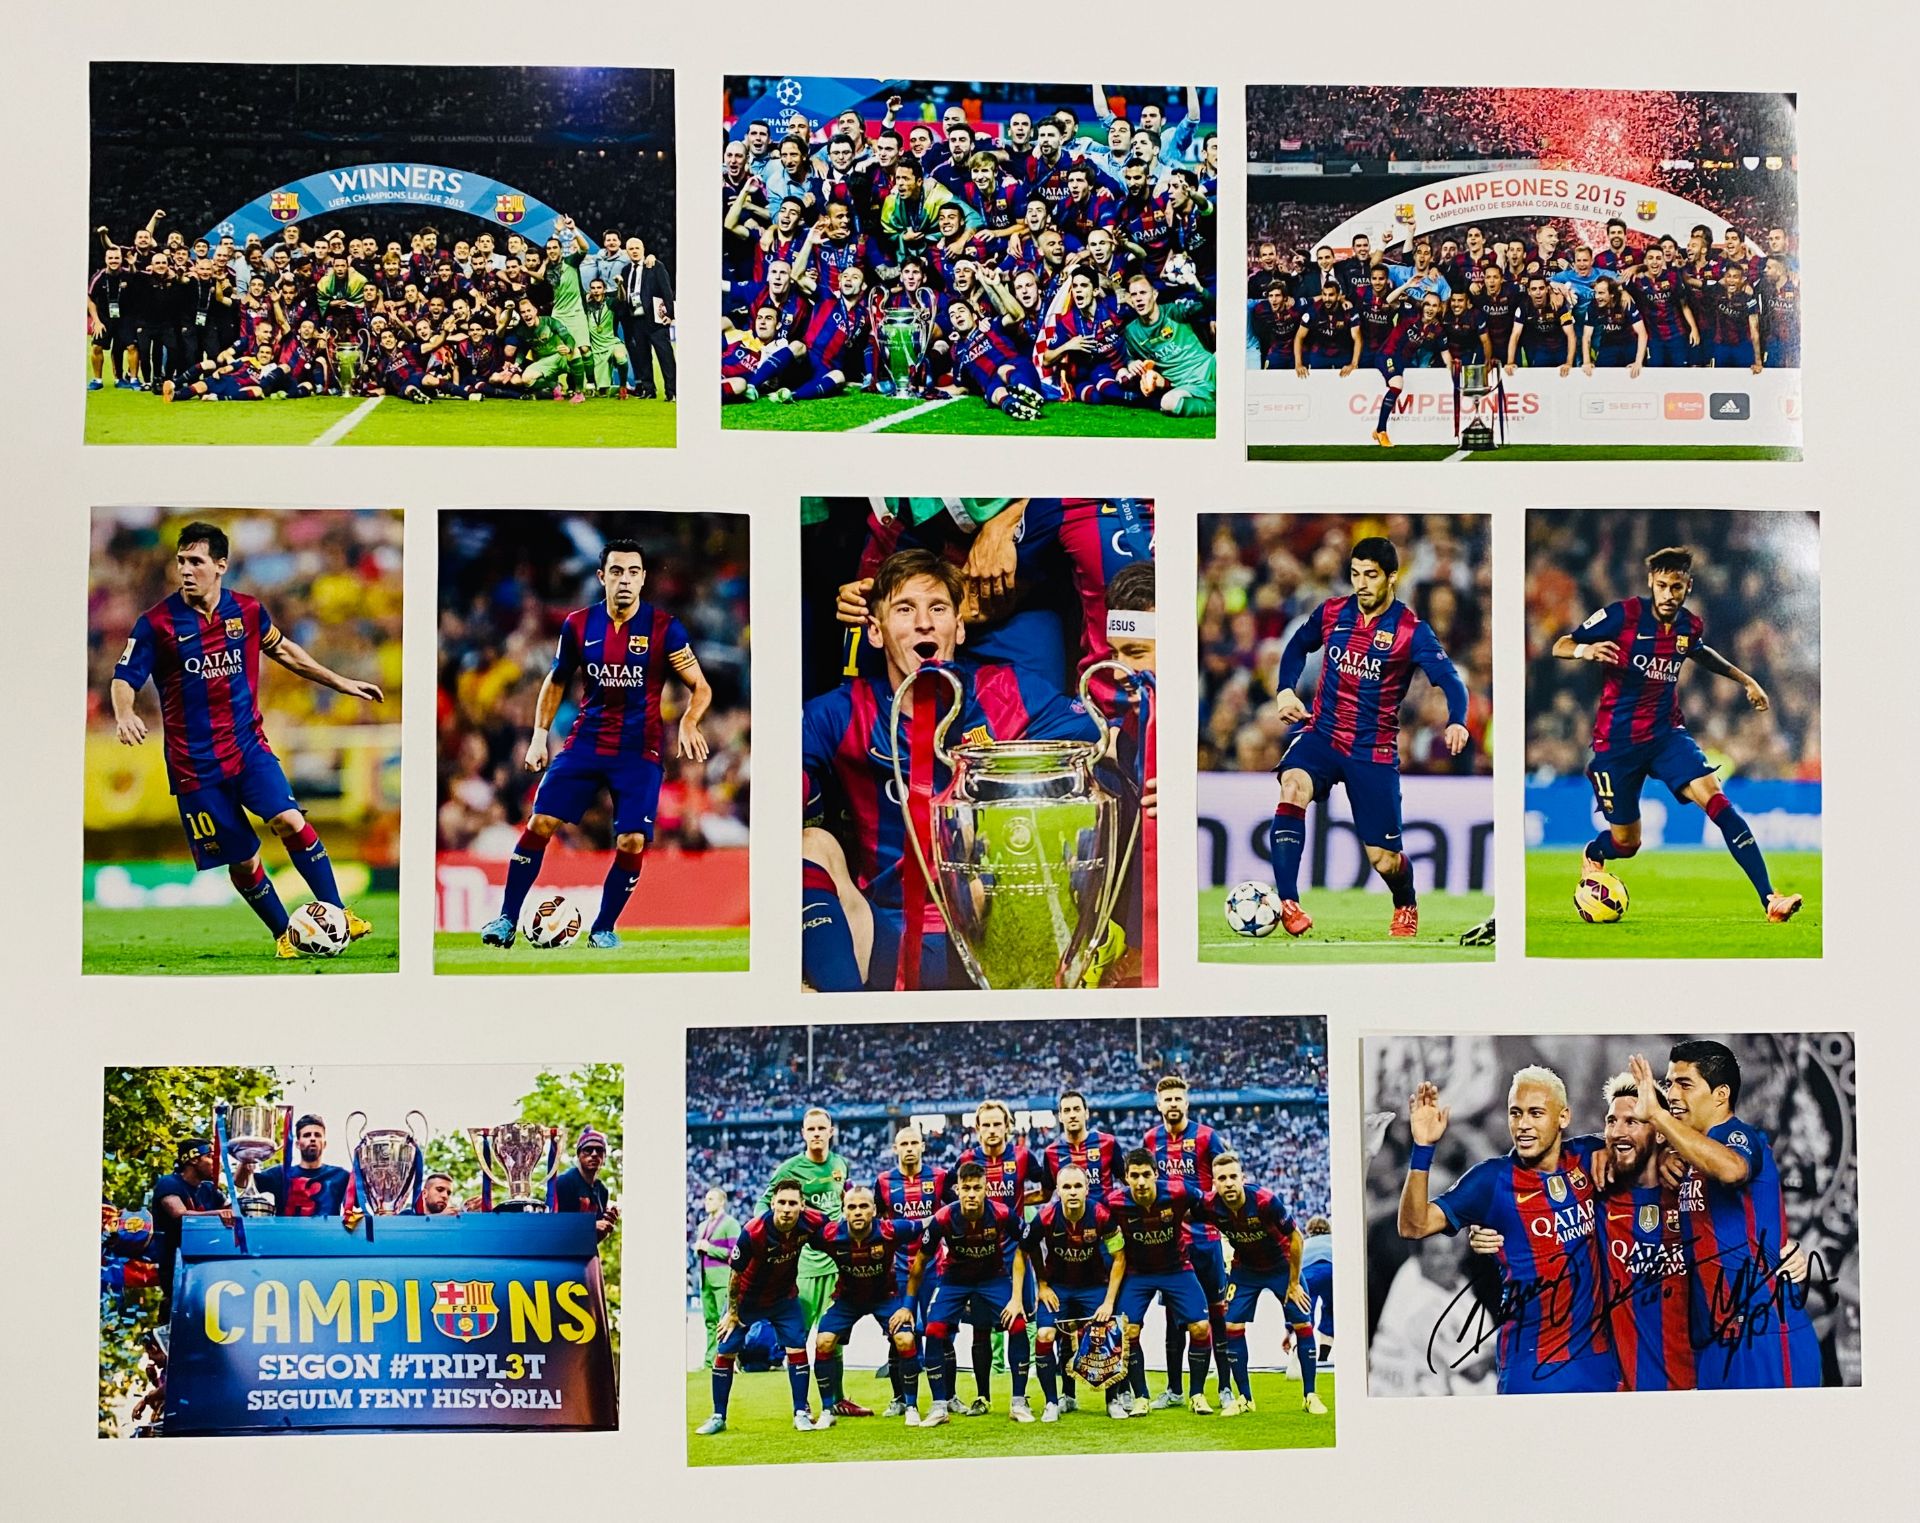 Barcelona 2014/2015 treble winners signed jersey - Image 3 of 3